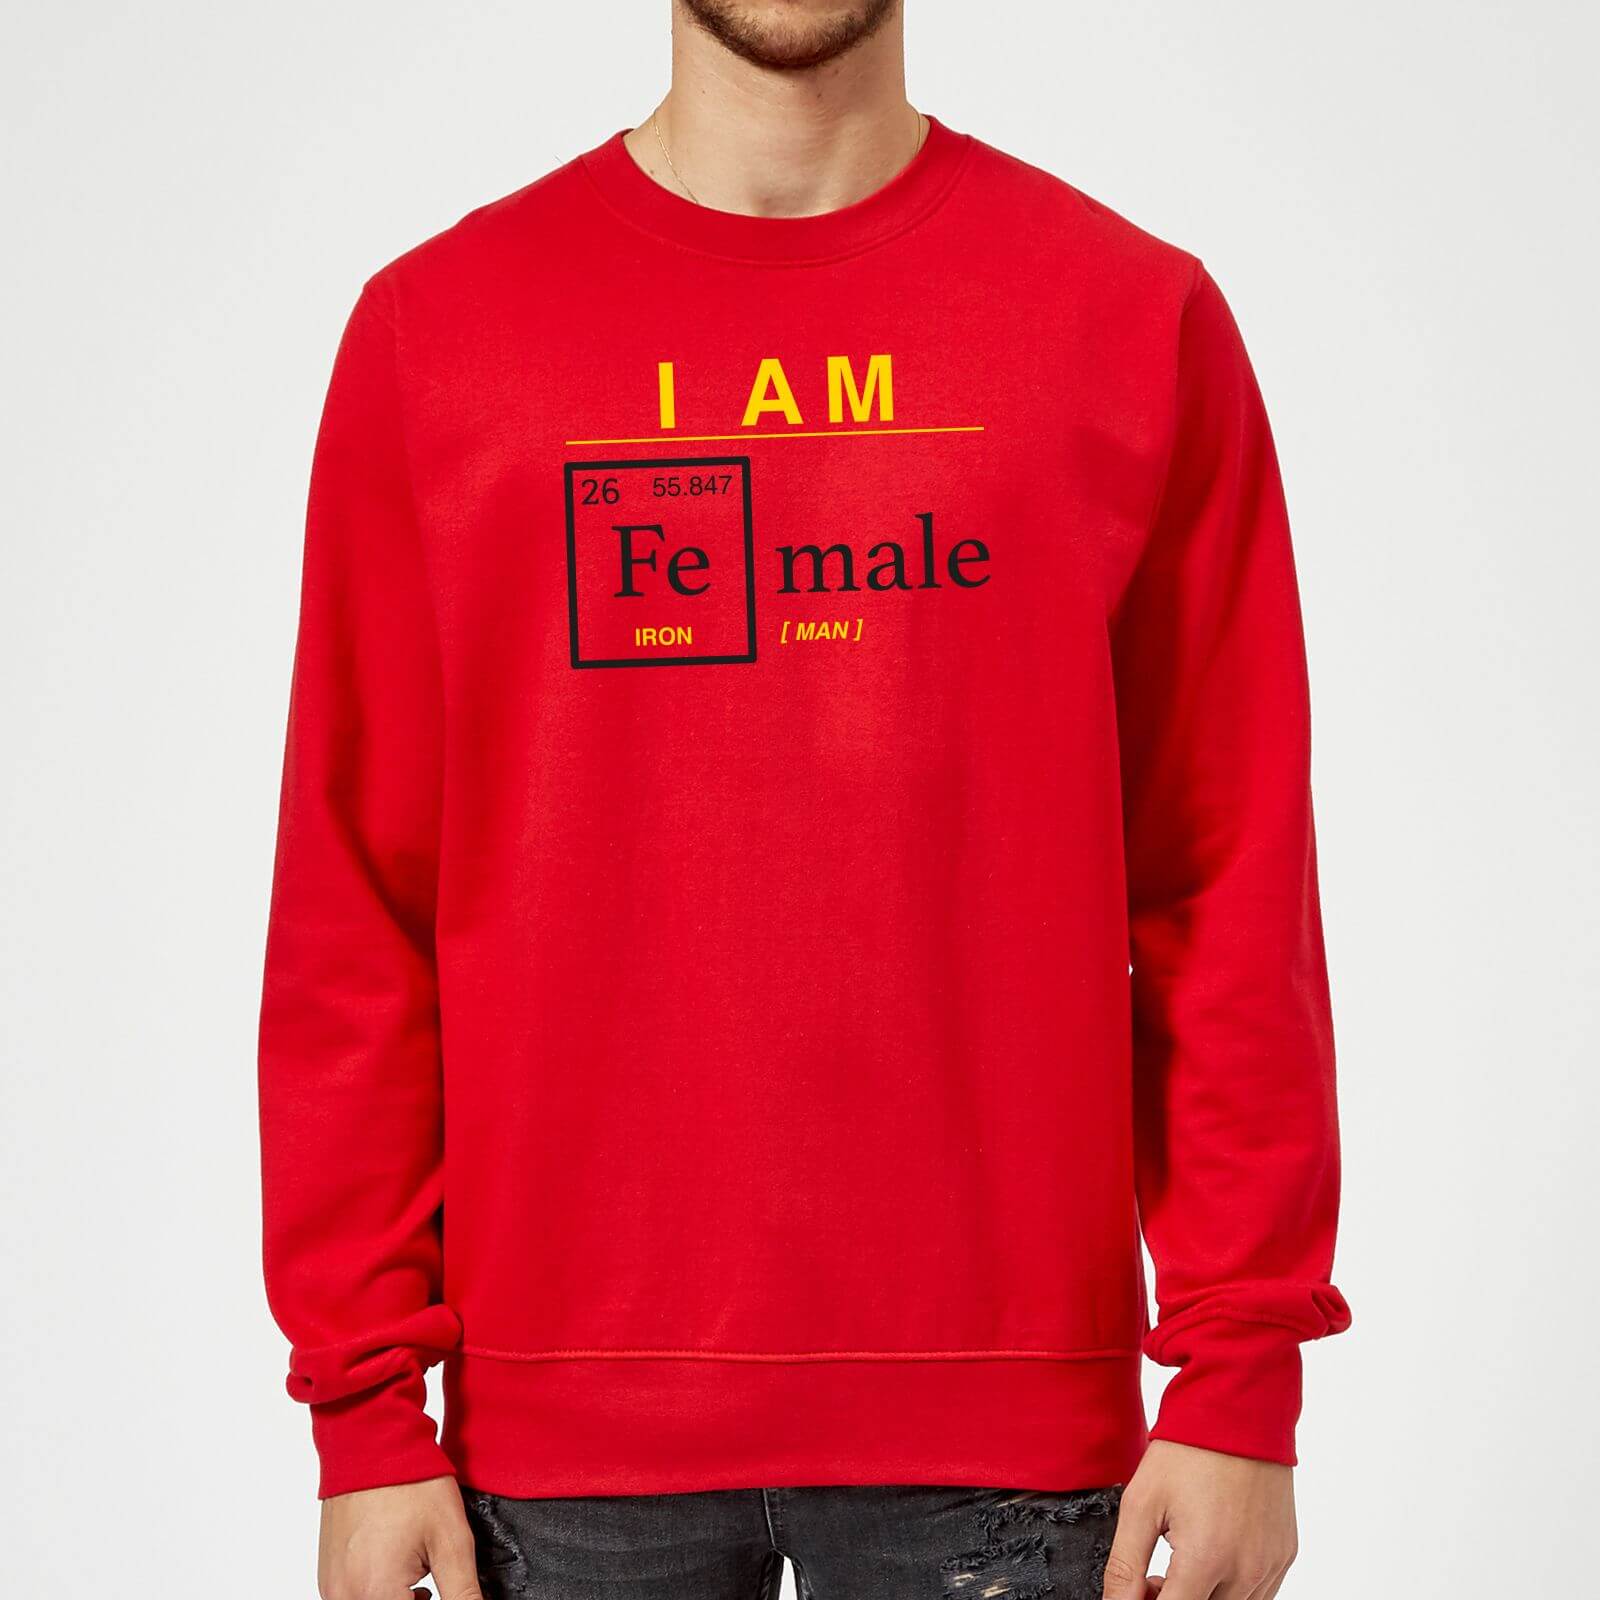 I Am Fe Male Sweatshirt - Red - M - Red